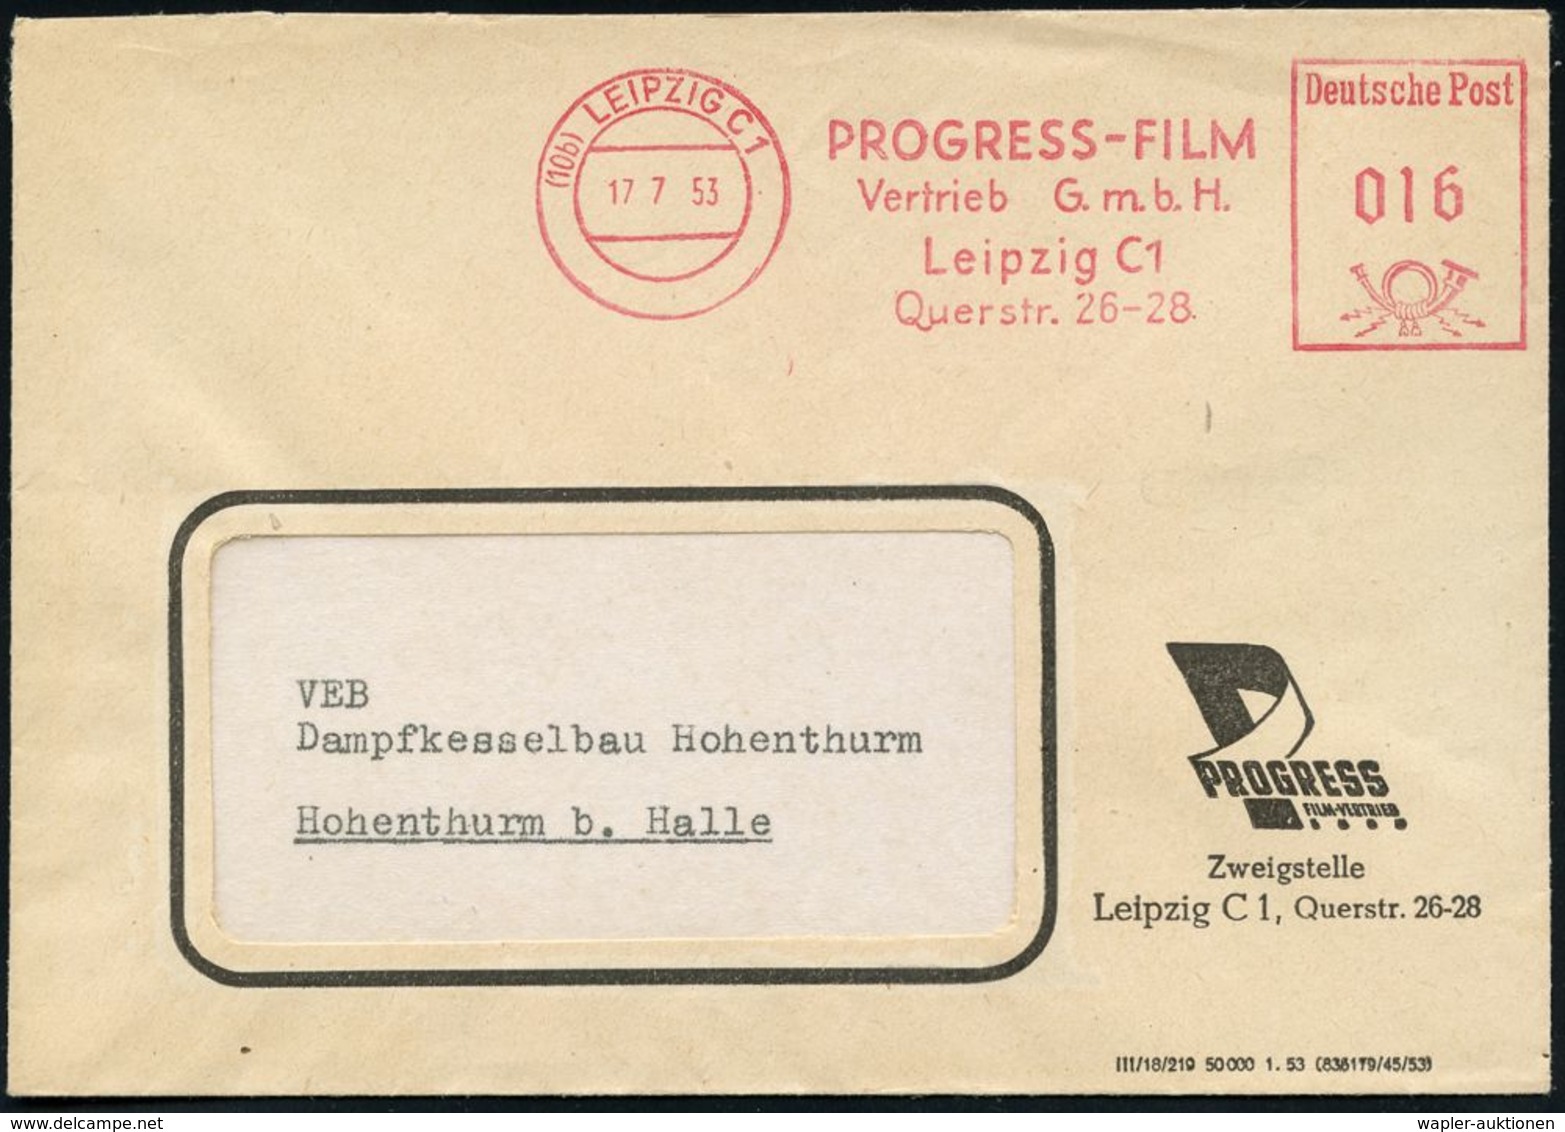 FILM / FILMVERLEIH / FILMTITEL / KINO : (10b) LEIPZIG C1/ PROGRESS-FILM/ Vertriebs GmbH/ ..Querstr. 26-28 1953 (17.7.) A - Cinéma